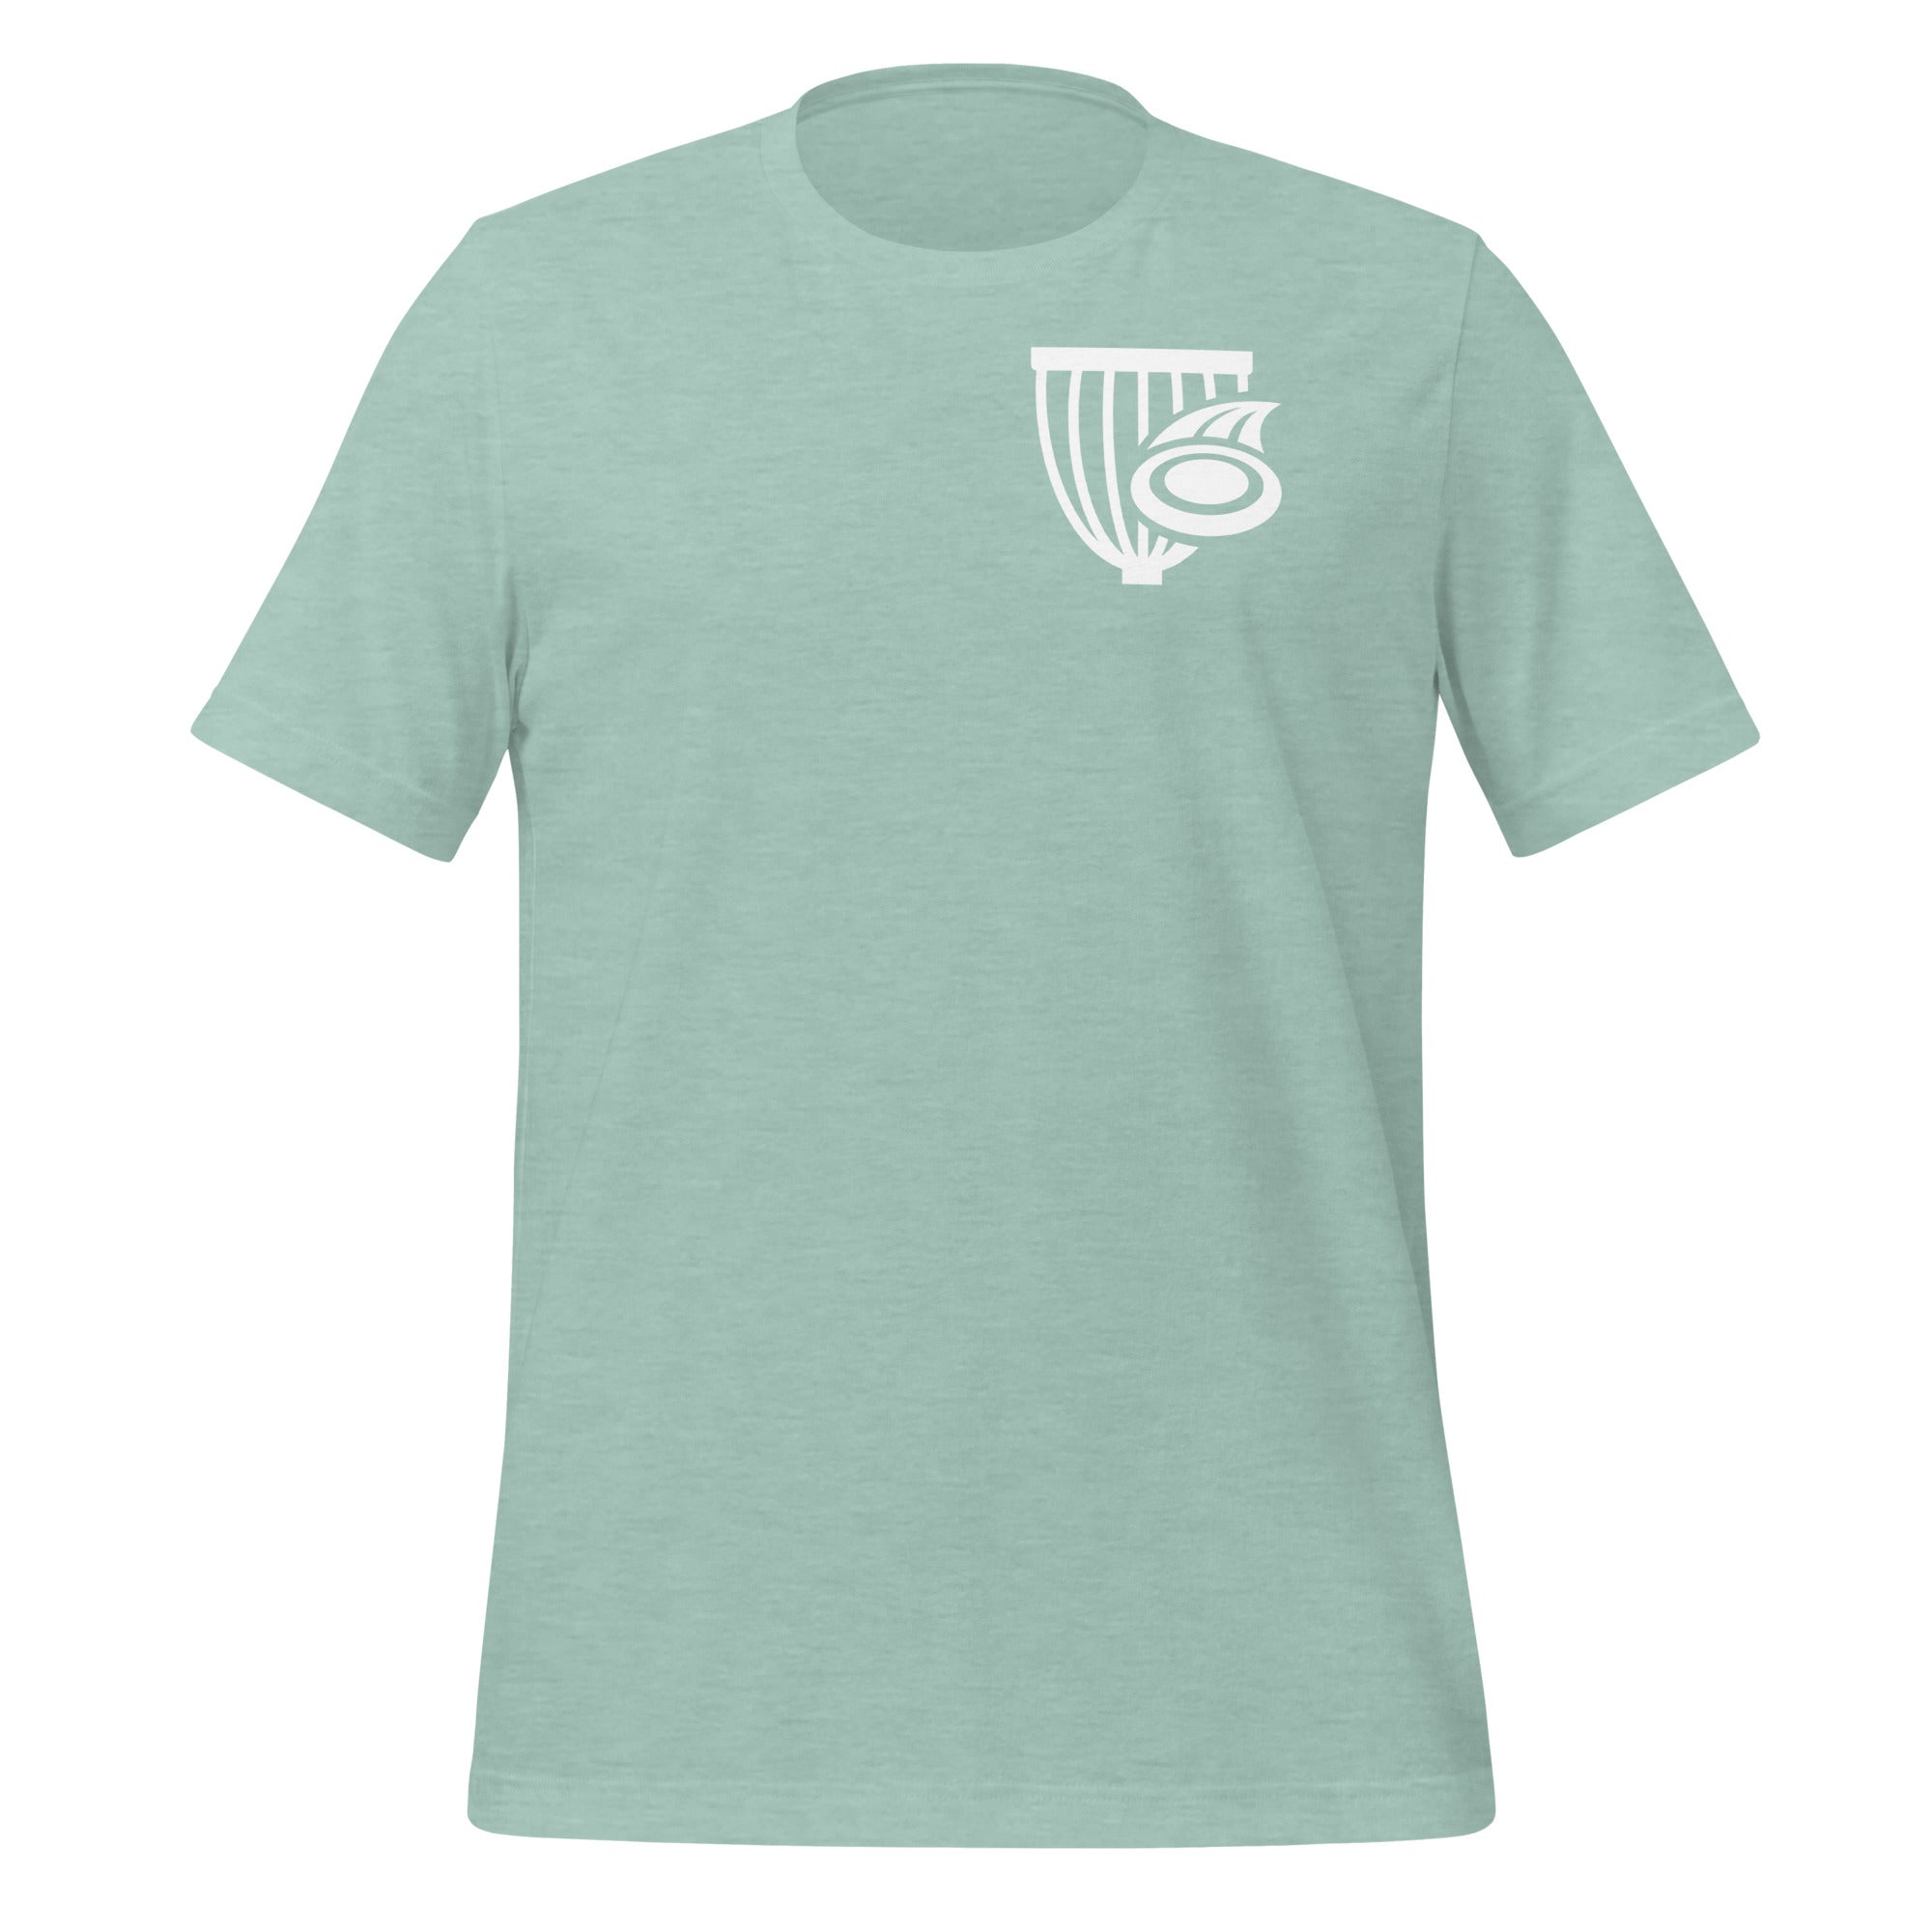 Buy heather-prism-dusty-blue The Disc Depot Short Sleeve Unisex t-shirt